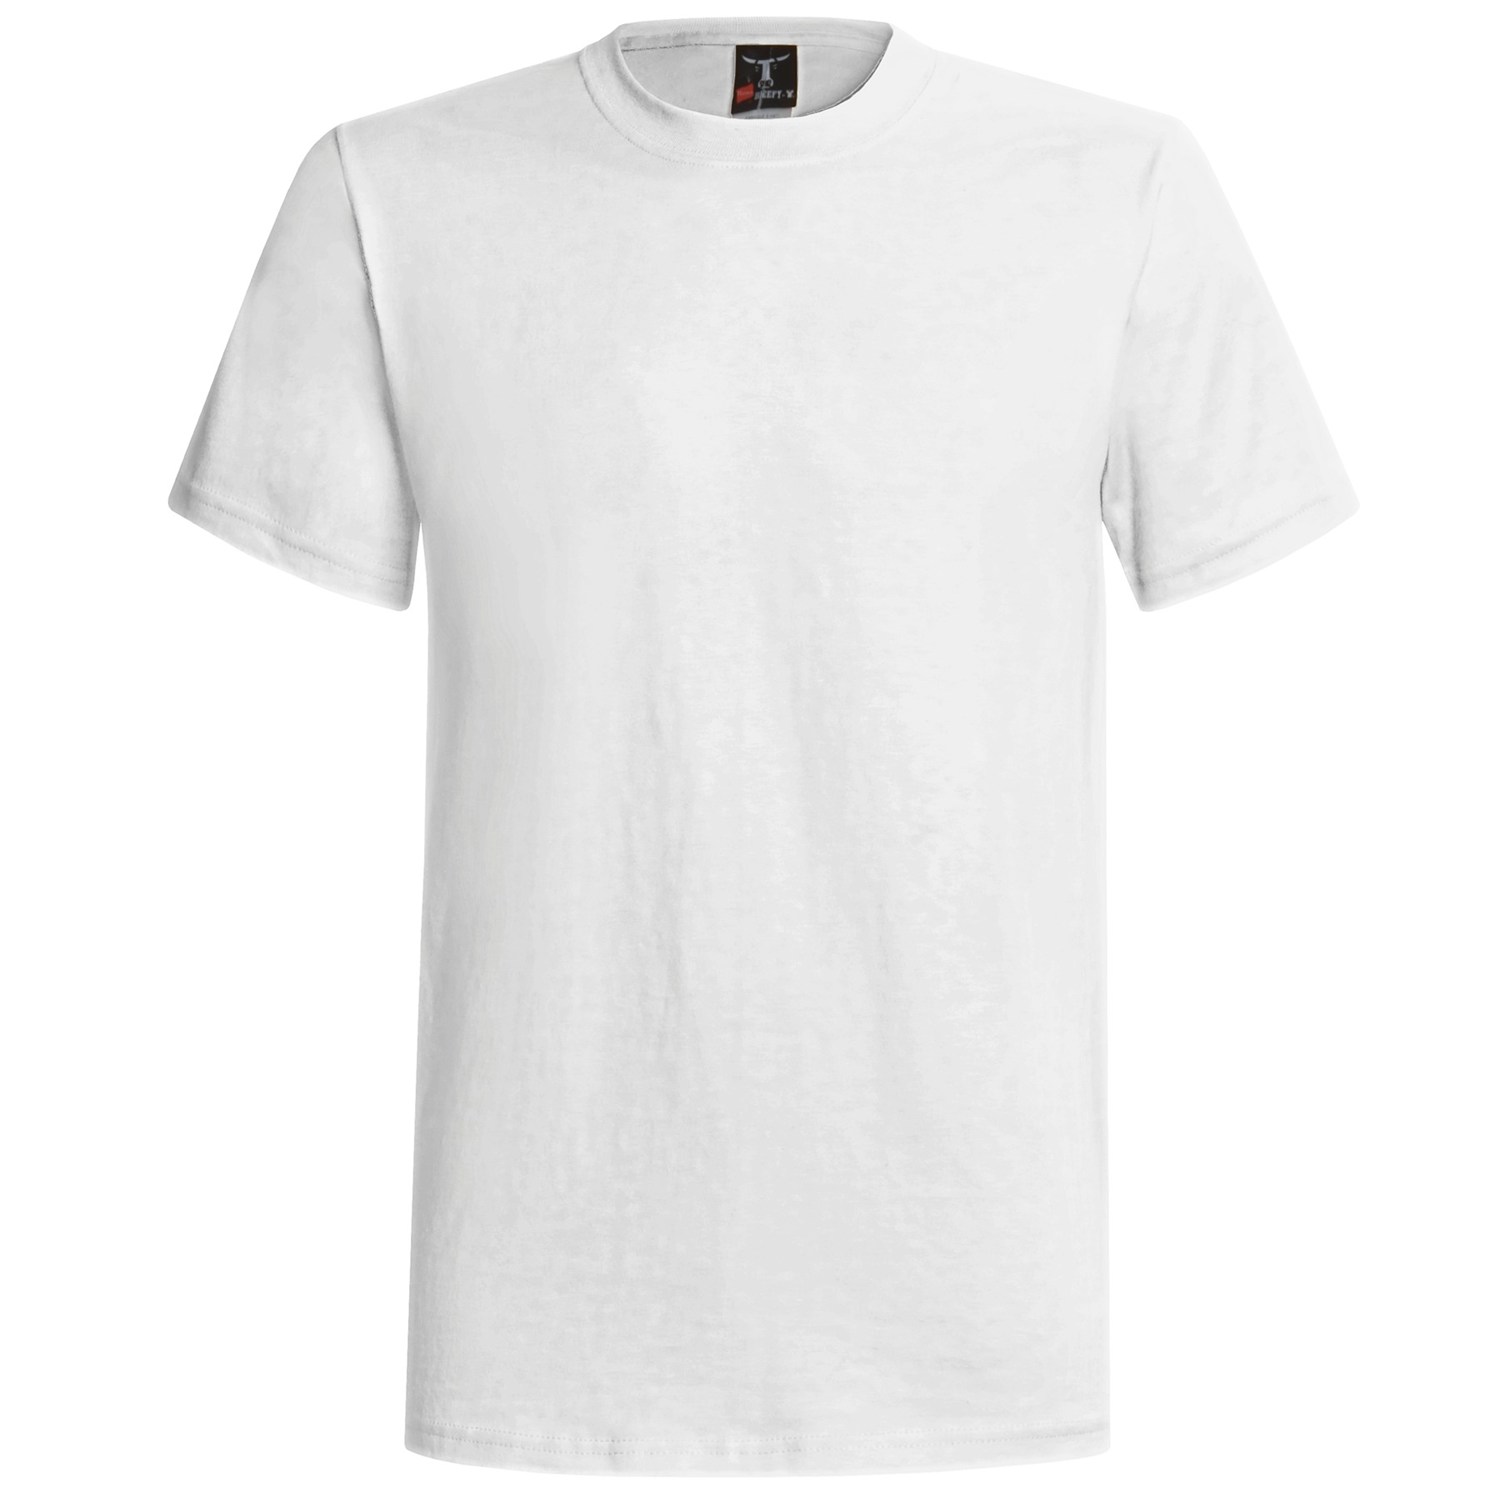 Валдберис футболка мужская. Белая футболка. Чисто белая футболка. Белая футболка мужская. Футболка на белом фоне.